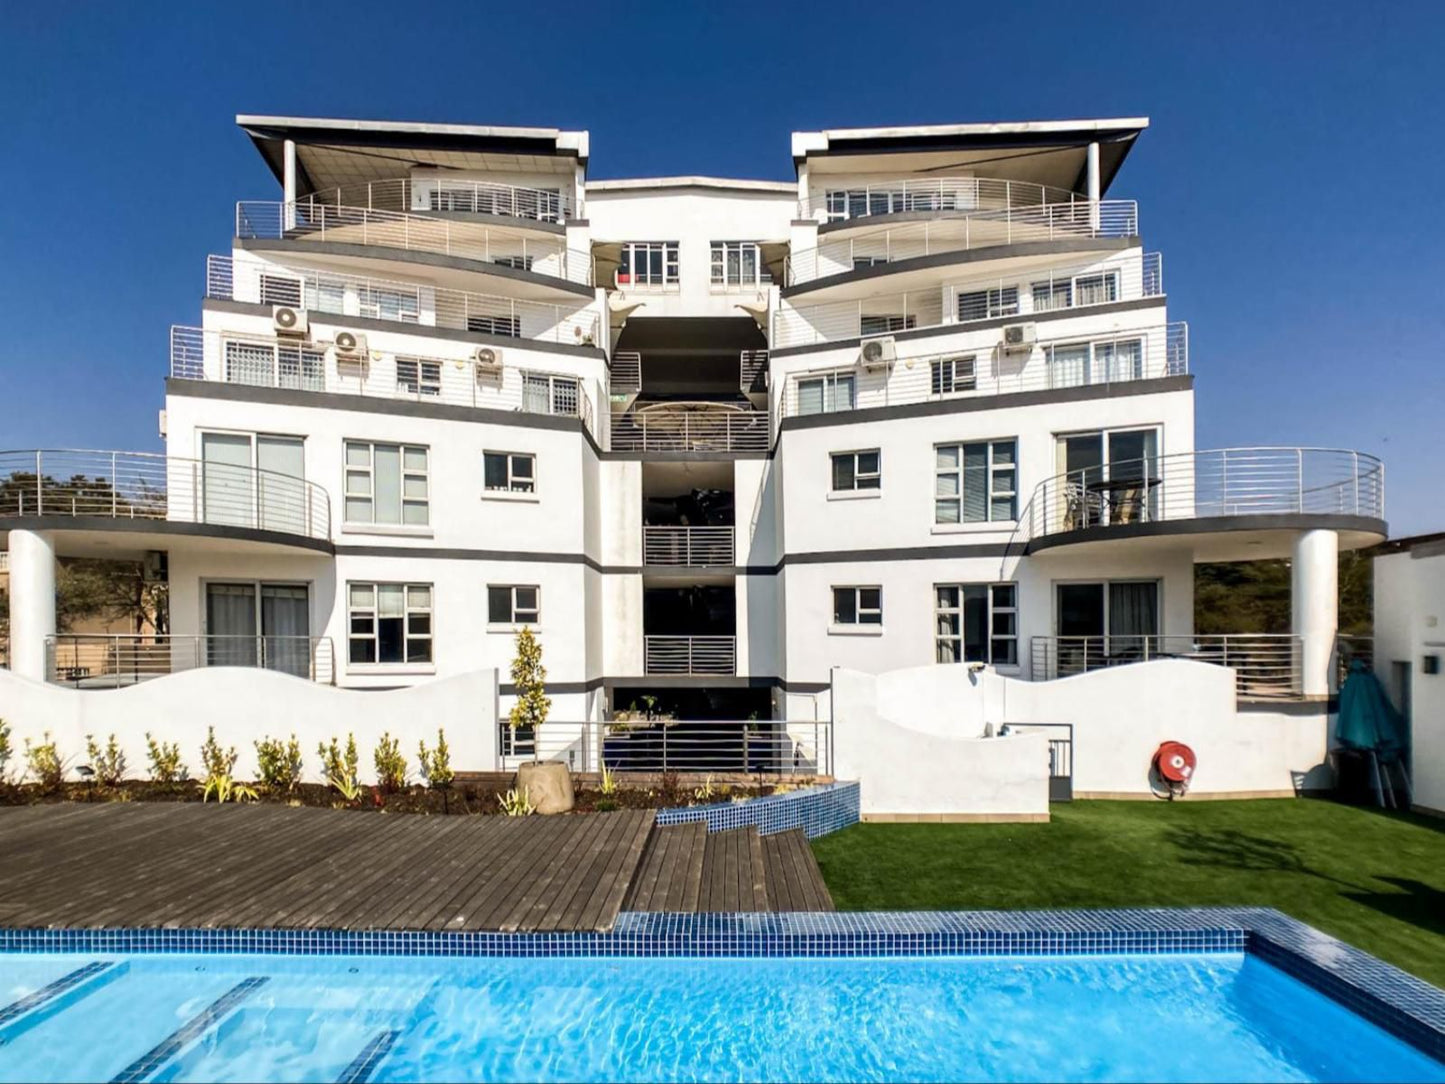 23 Splice Apartments Killarney Johannesburg Gauteng South Africa Balcony, Architecture, House, Building, Swimming Pool